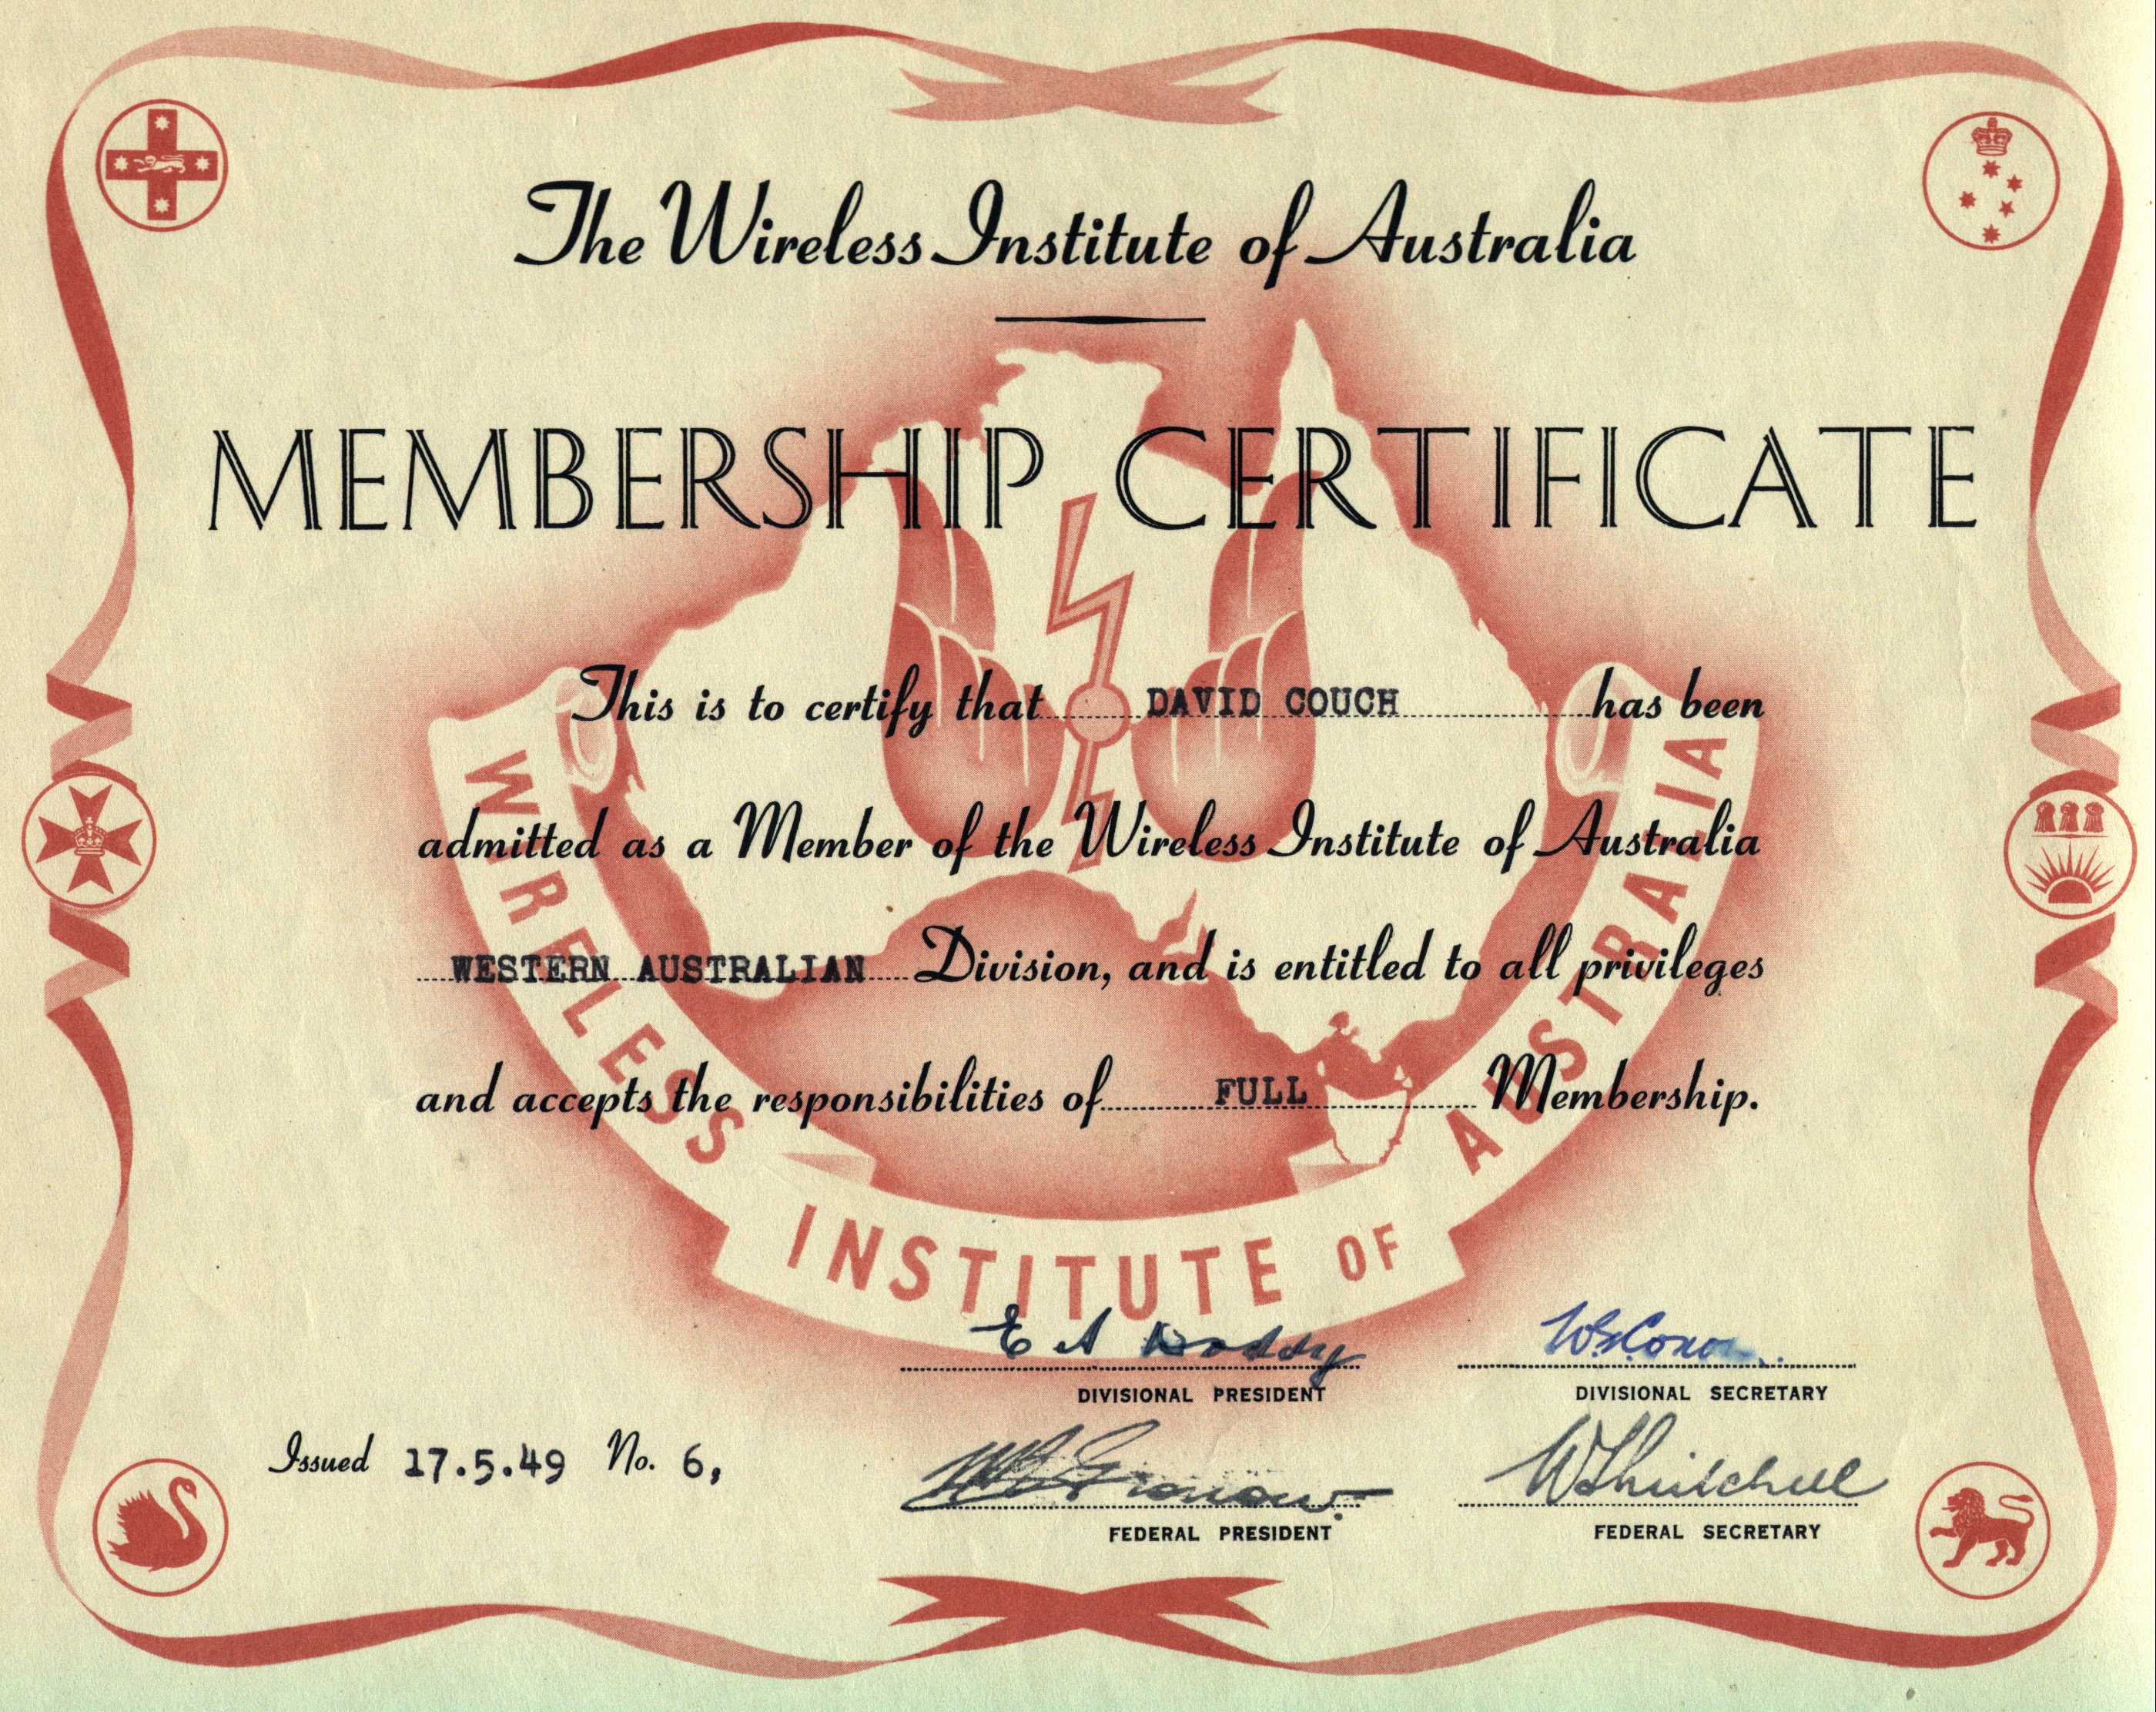 David Couch WIA WA Membership Certificate 1949